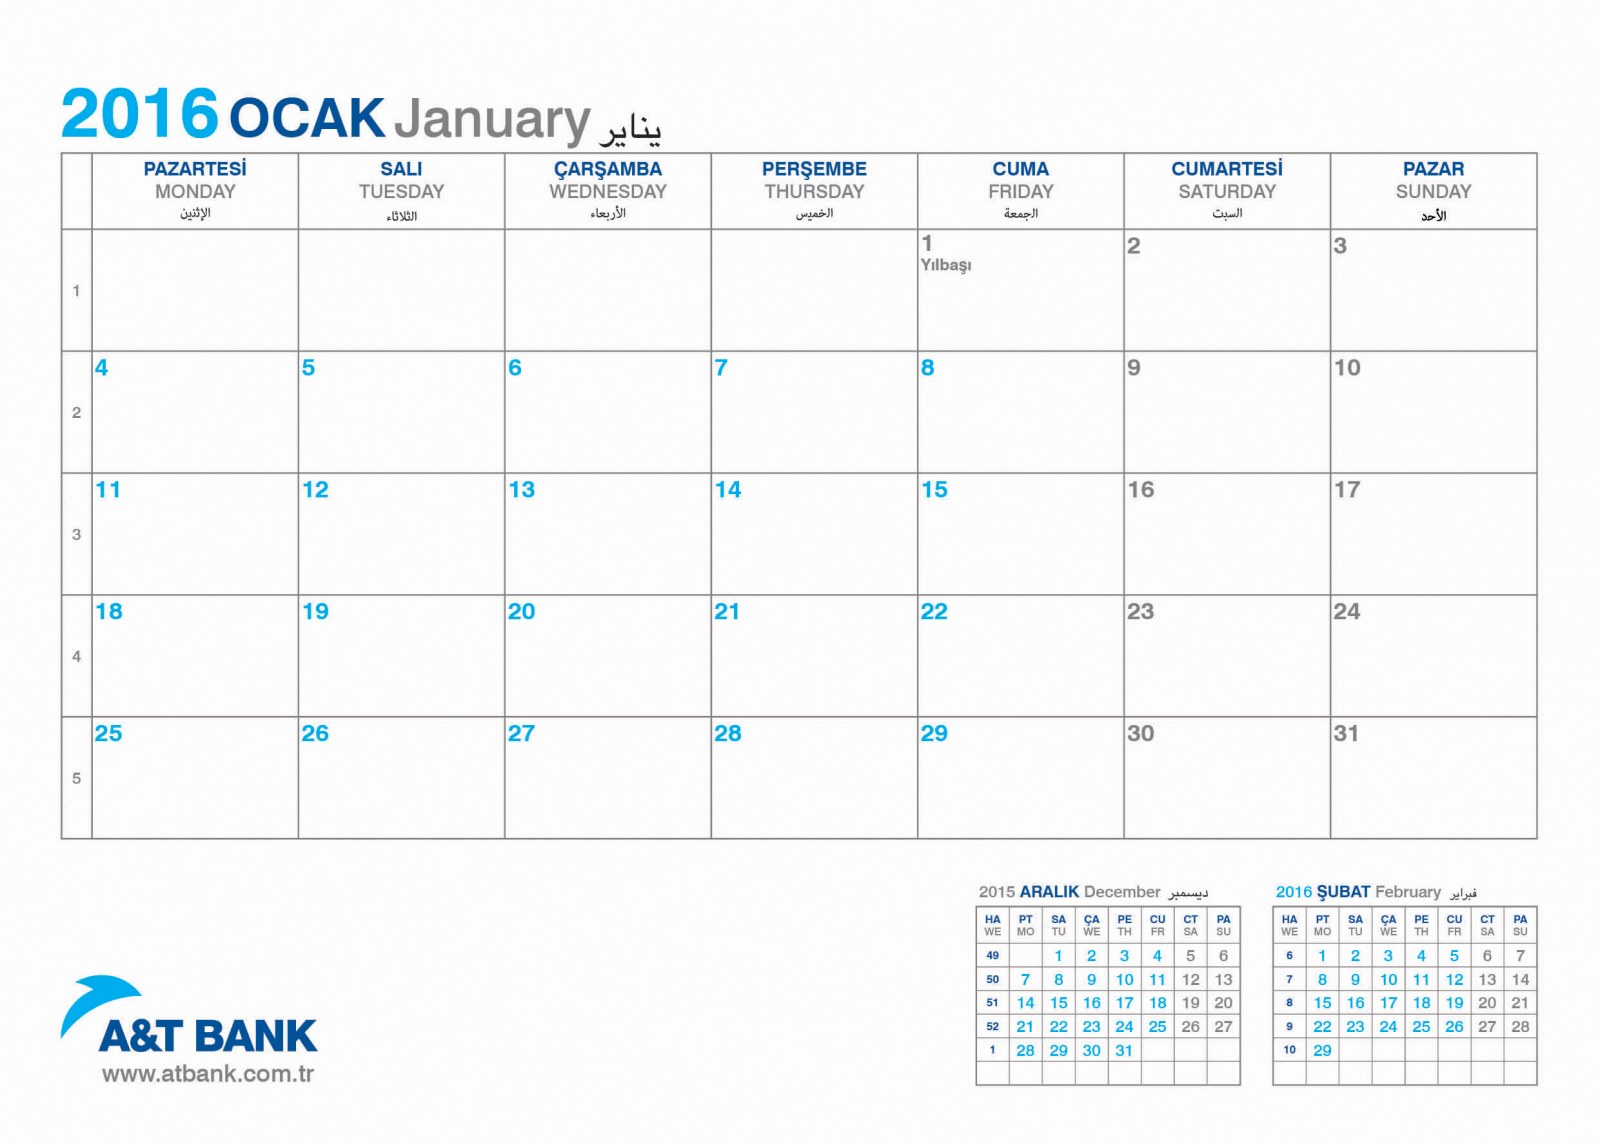 A&T BANK / Takvim / Calendar